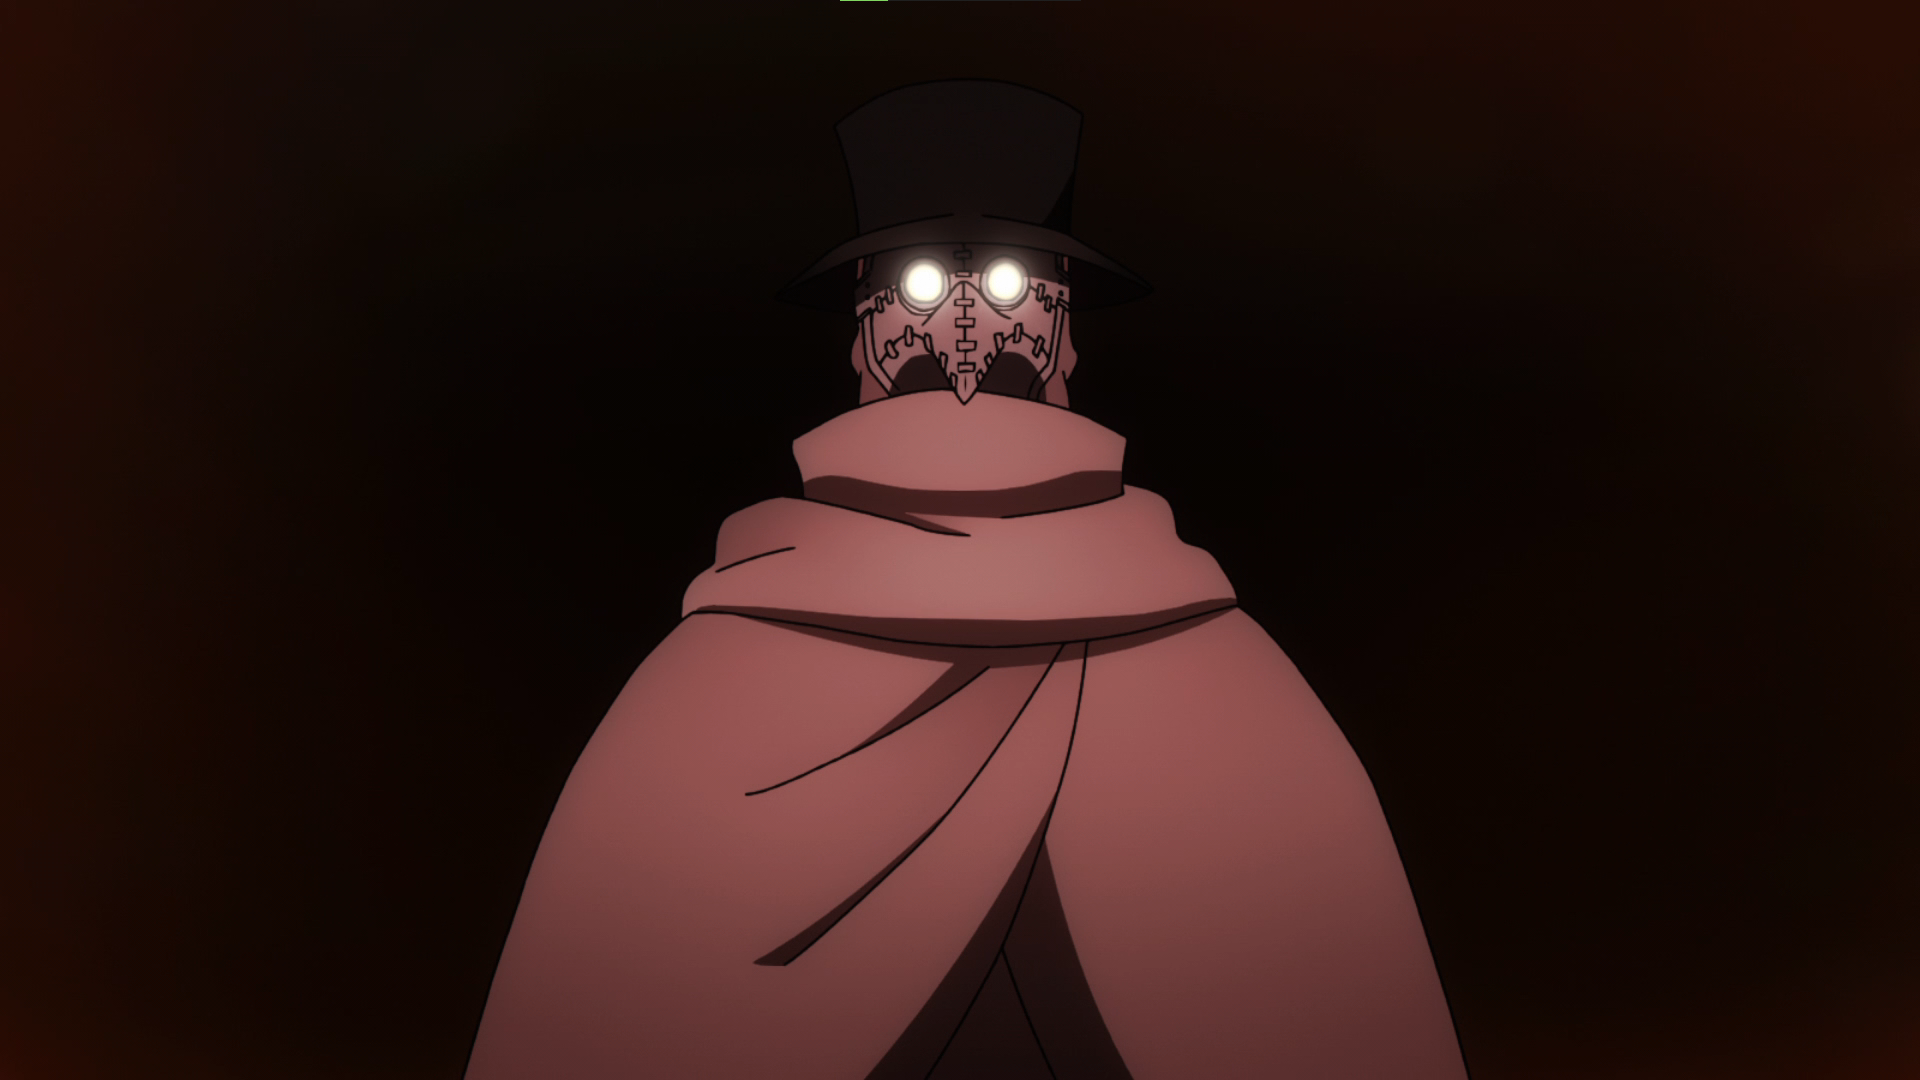 Anime 1920x1080 Enen no Shouboutai anime Plague plague doctors glowing eyes Anime screenshot demon simple background minimalism mask